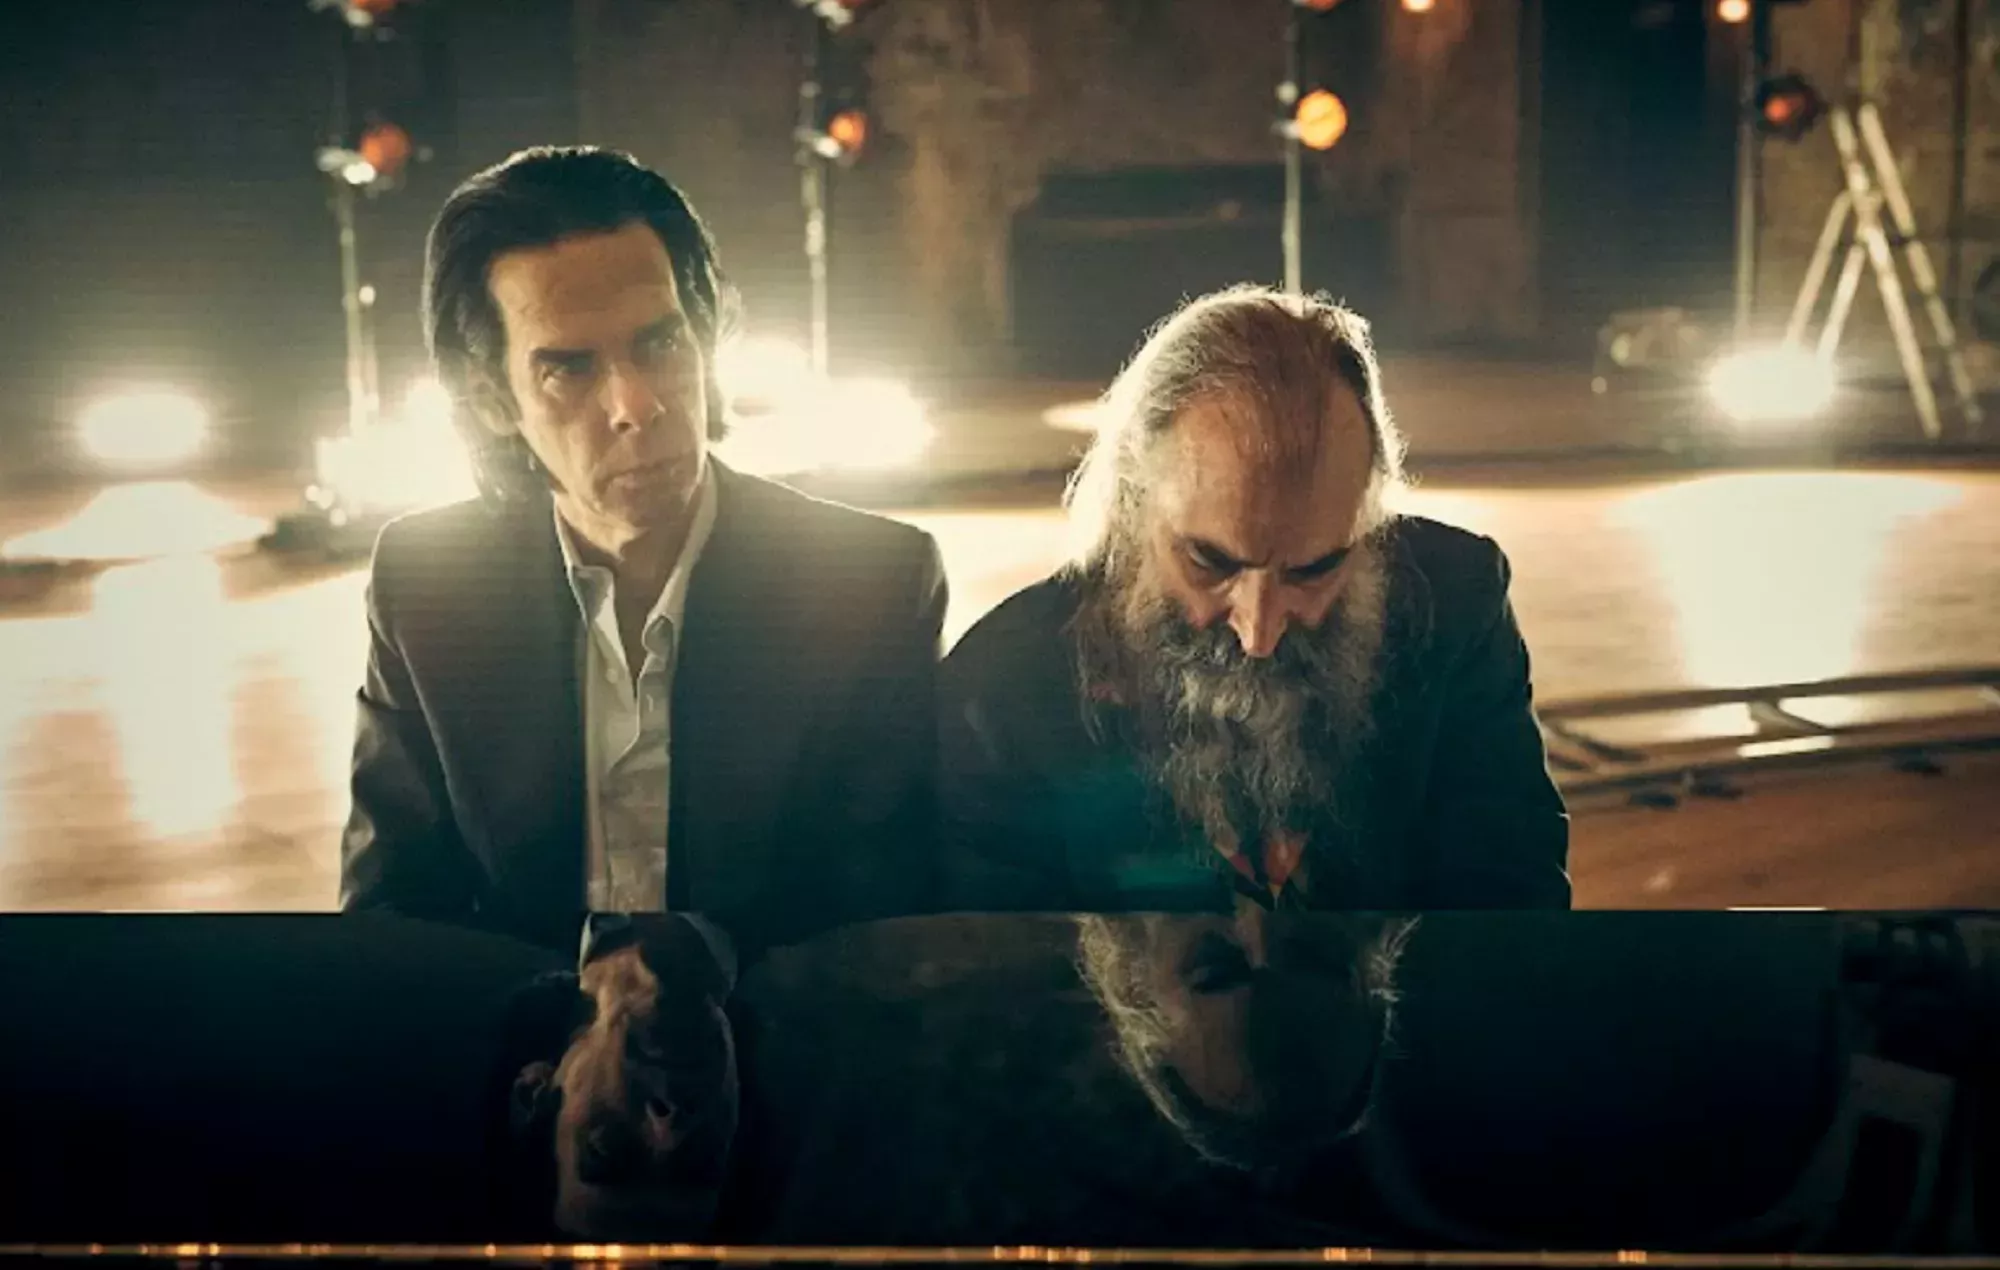 Vea un clip exclusivo de 'This Much I Know To Be True' de Nick Cave y Warren Ellis con Marianne Faithfull